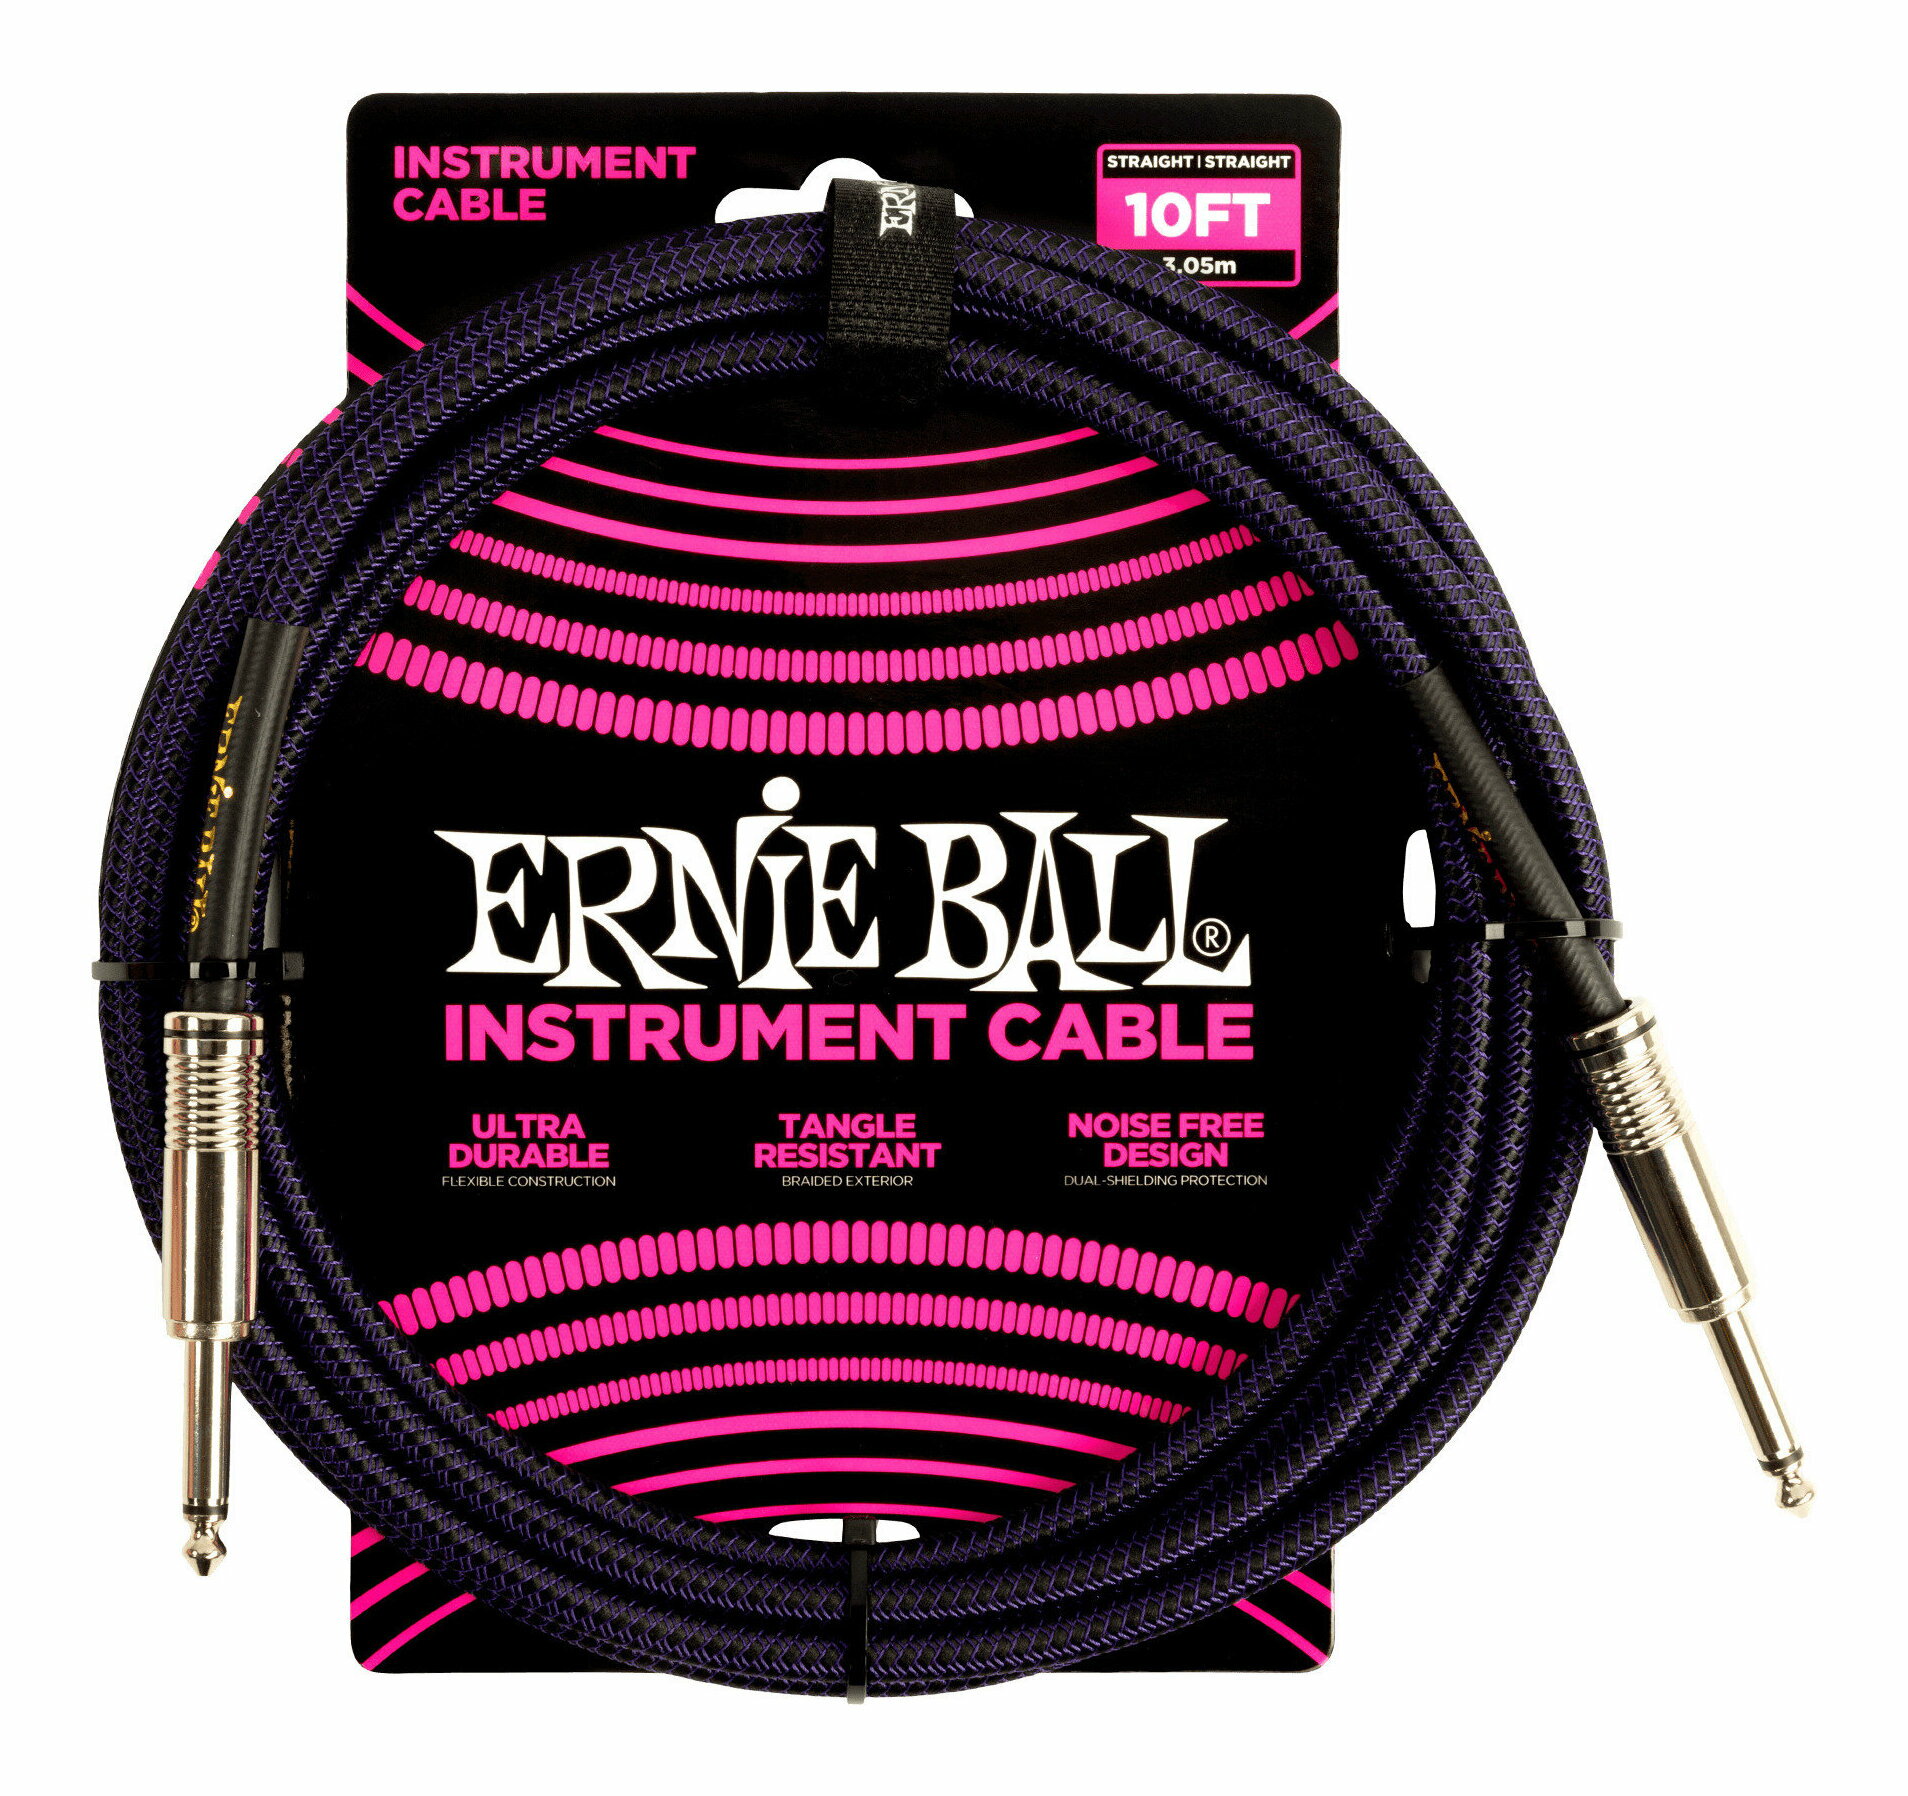 ERNIE BALL 6393 ギターケーブル ブレイデッド・ジャケット Purple Black 3.05m S/S【送料無料】